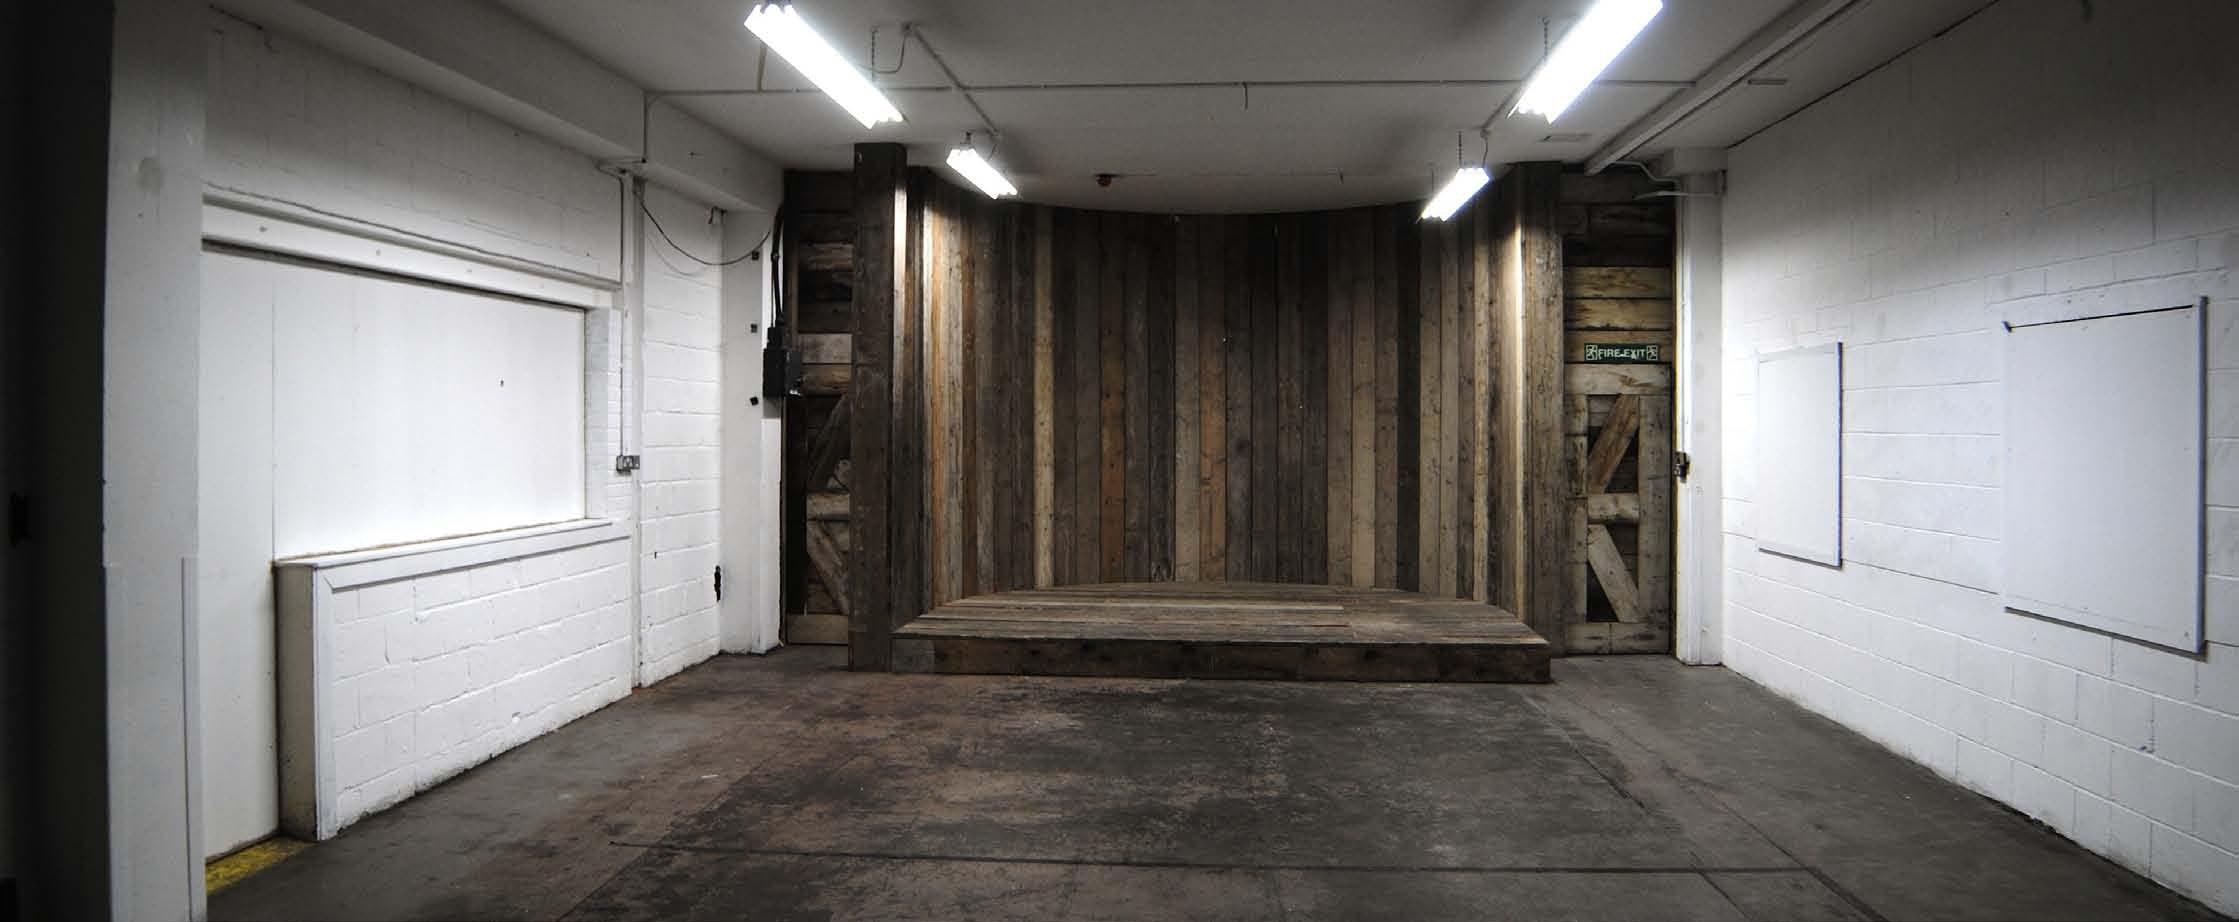 Performance Spaces Venues in London - Hackney Downs Studios